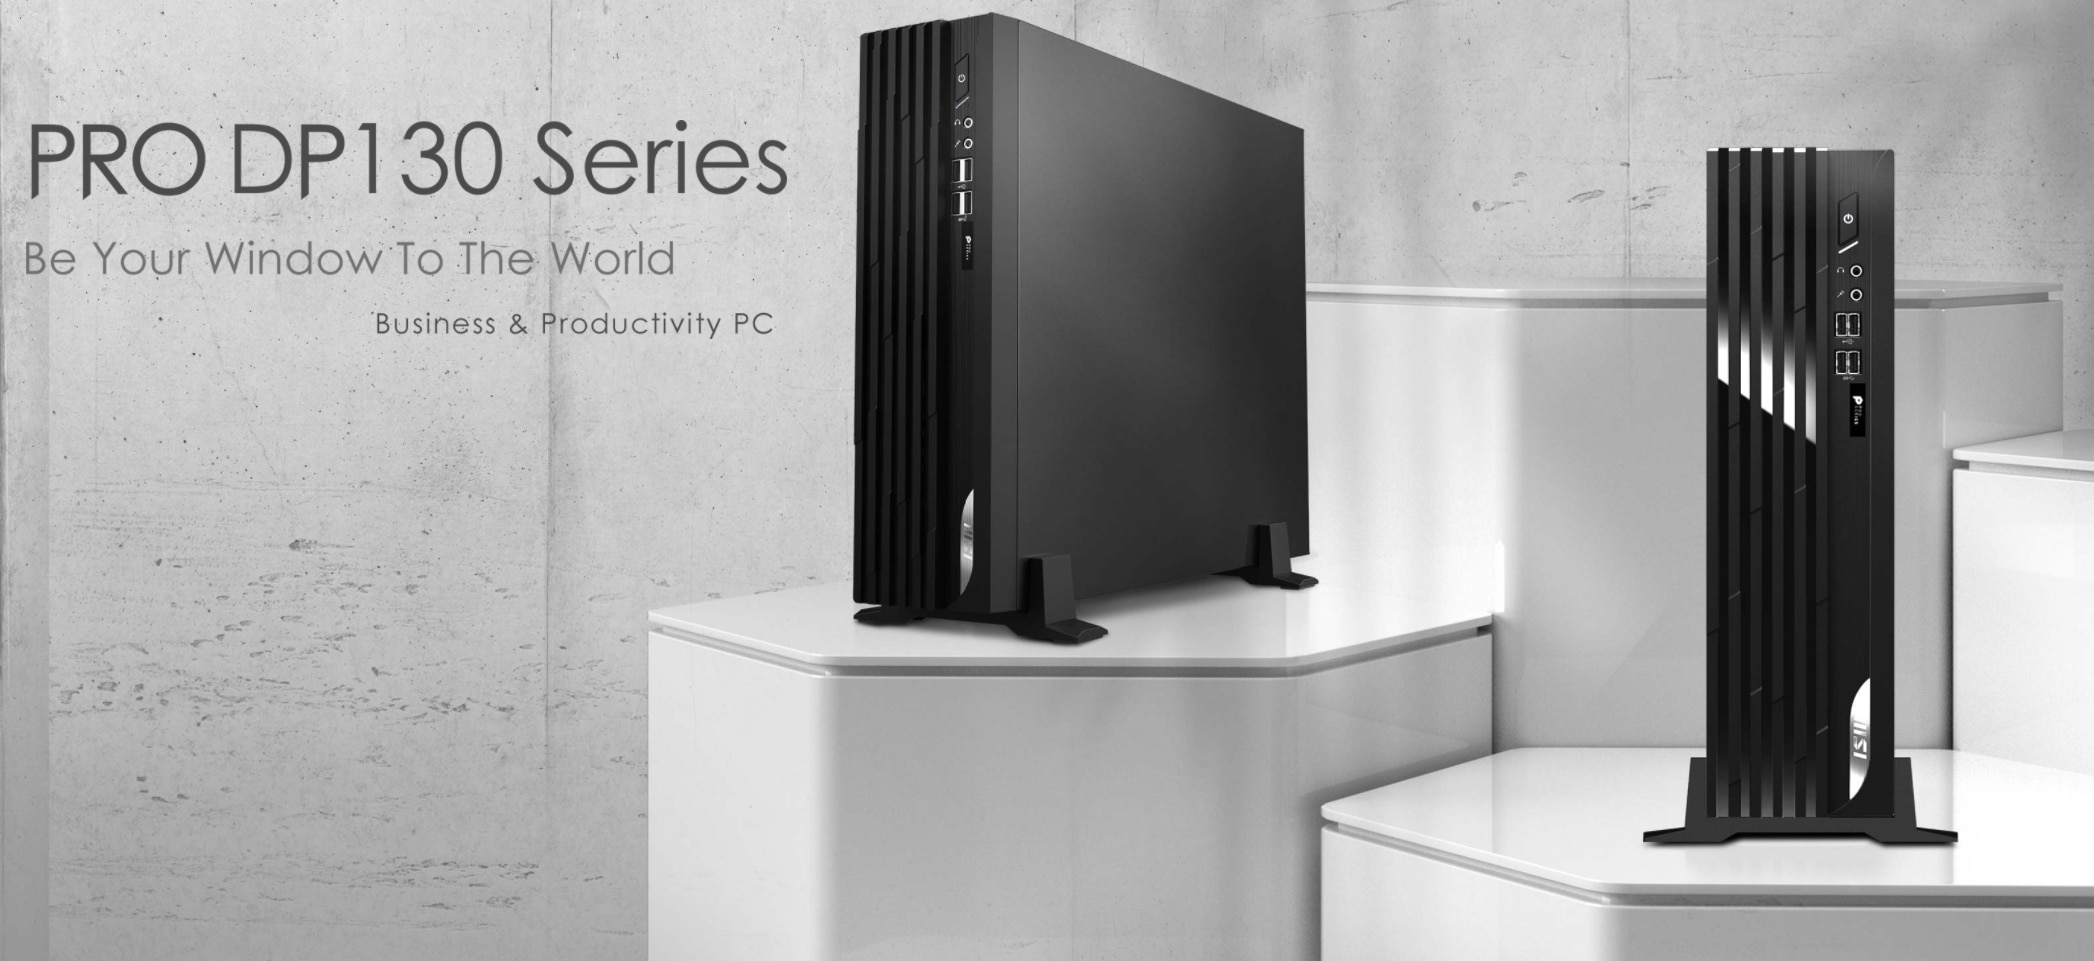 MSI presents its new compact PC PRO DP130 -